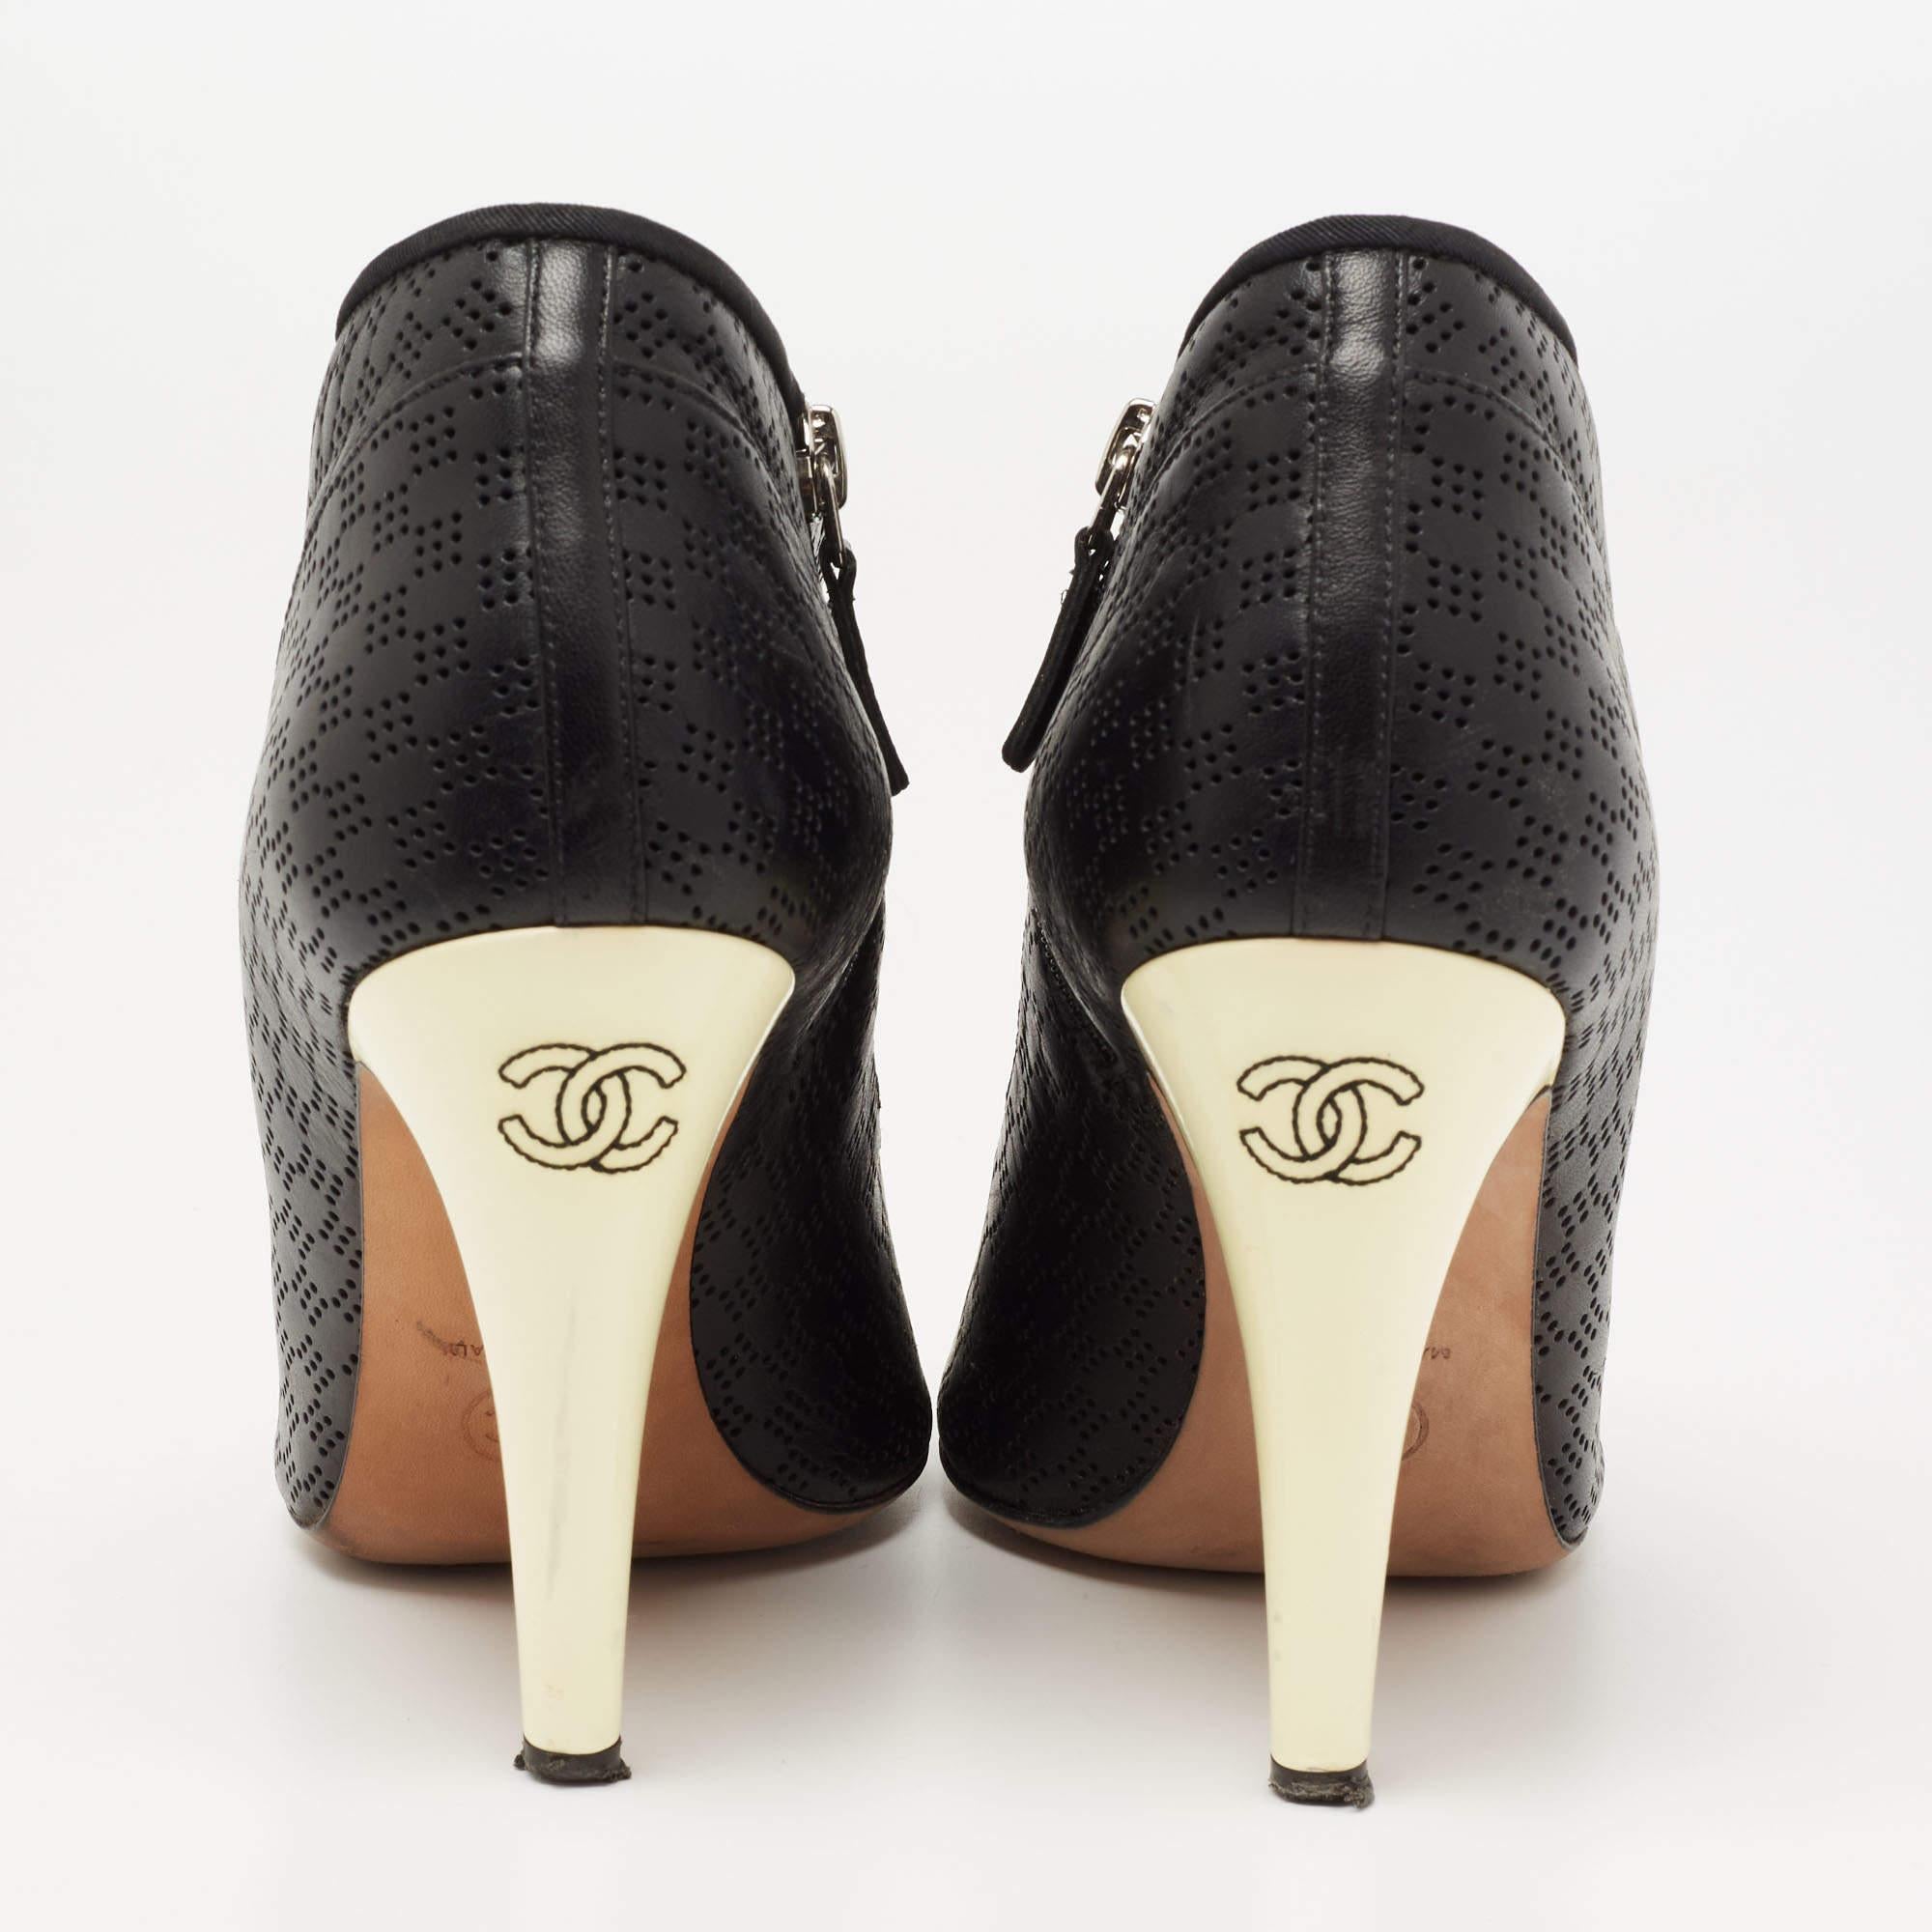 Chanel Black/Cream Leather And Patent Open Toe Ankle Boots Size 38.5 In Fair Condition For Sale In Dubai, Al Qouz 2